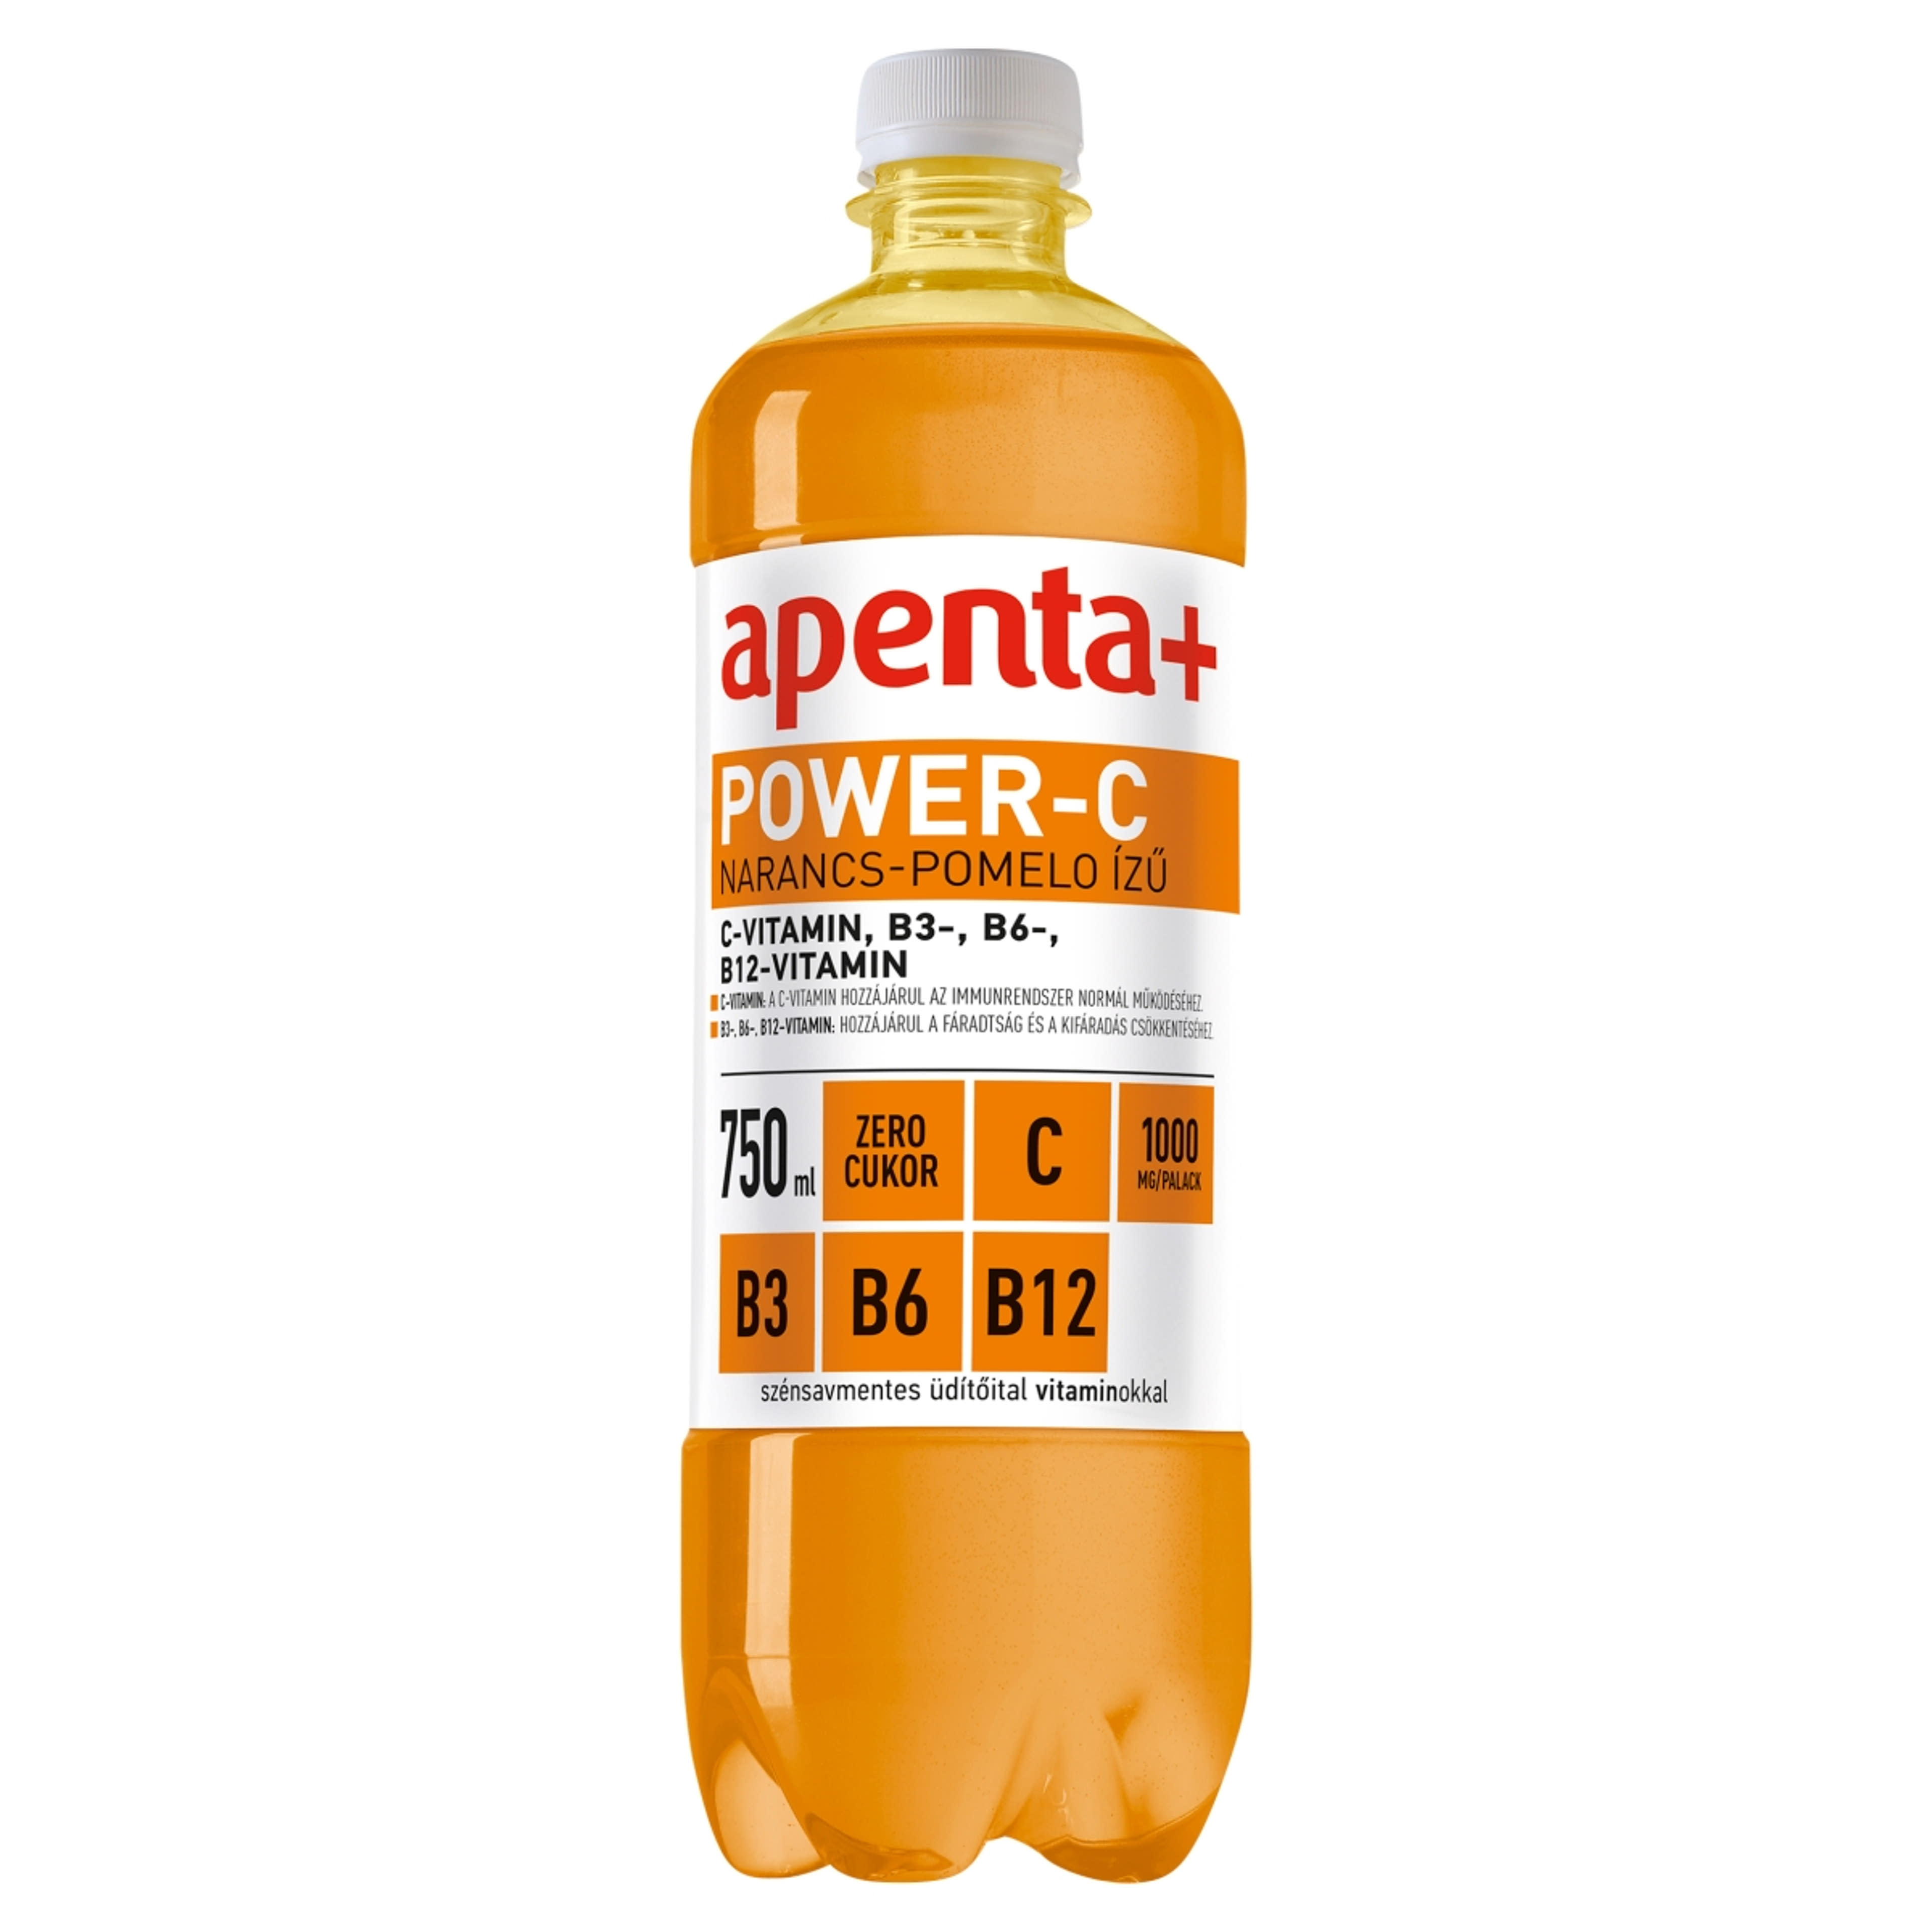 Apenta + power-c üdítőital - 750 ml